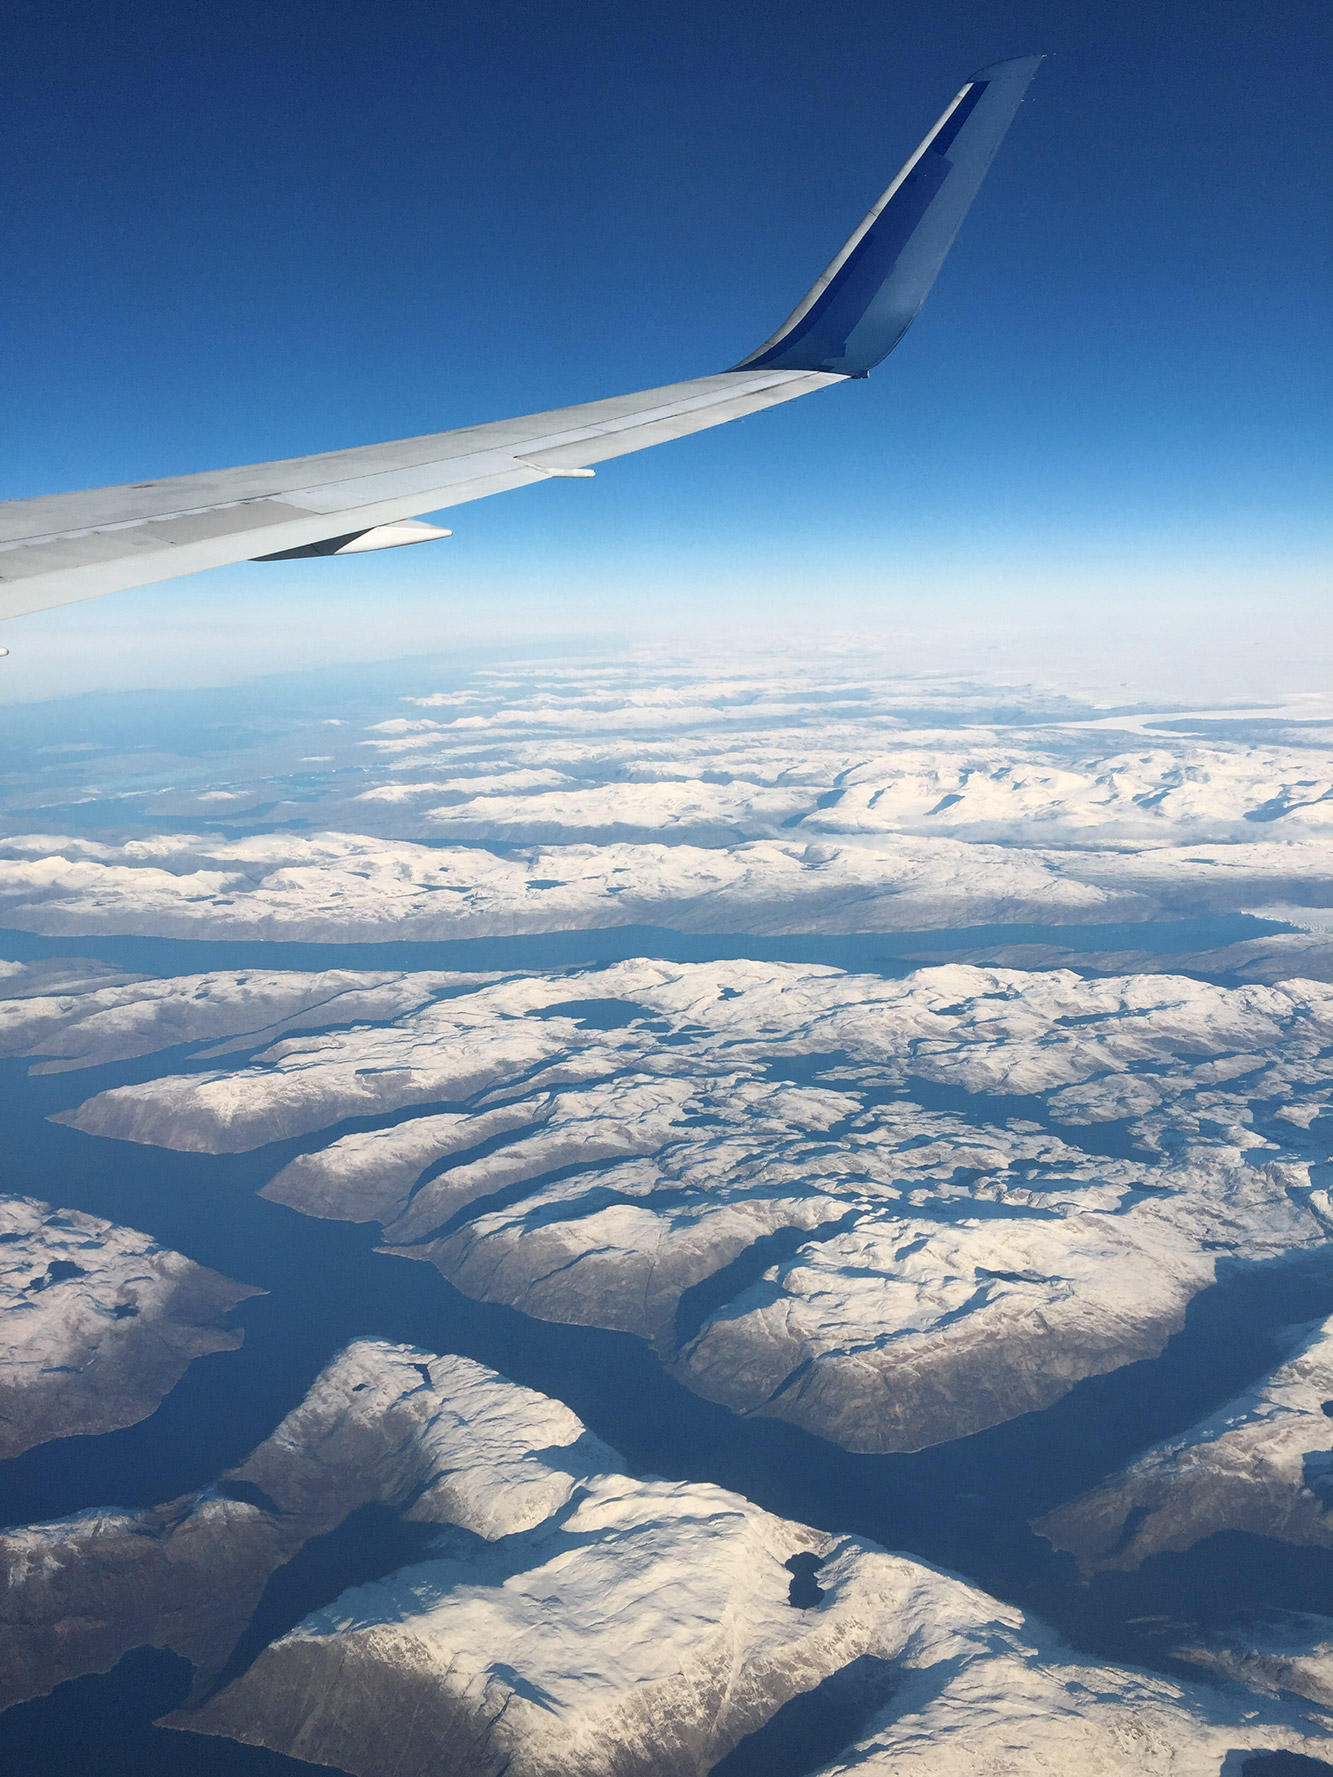 Amerika dag 1: Groenland vanuit de lucht